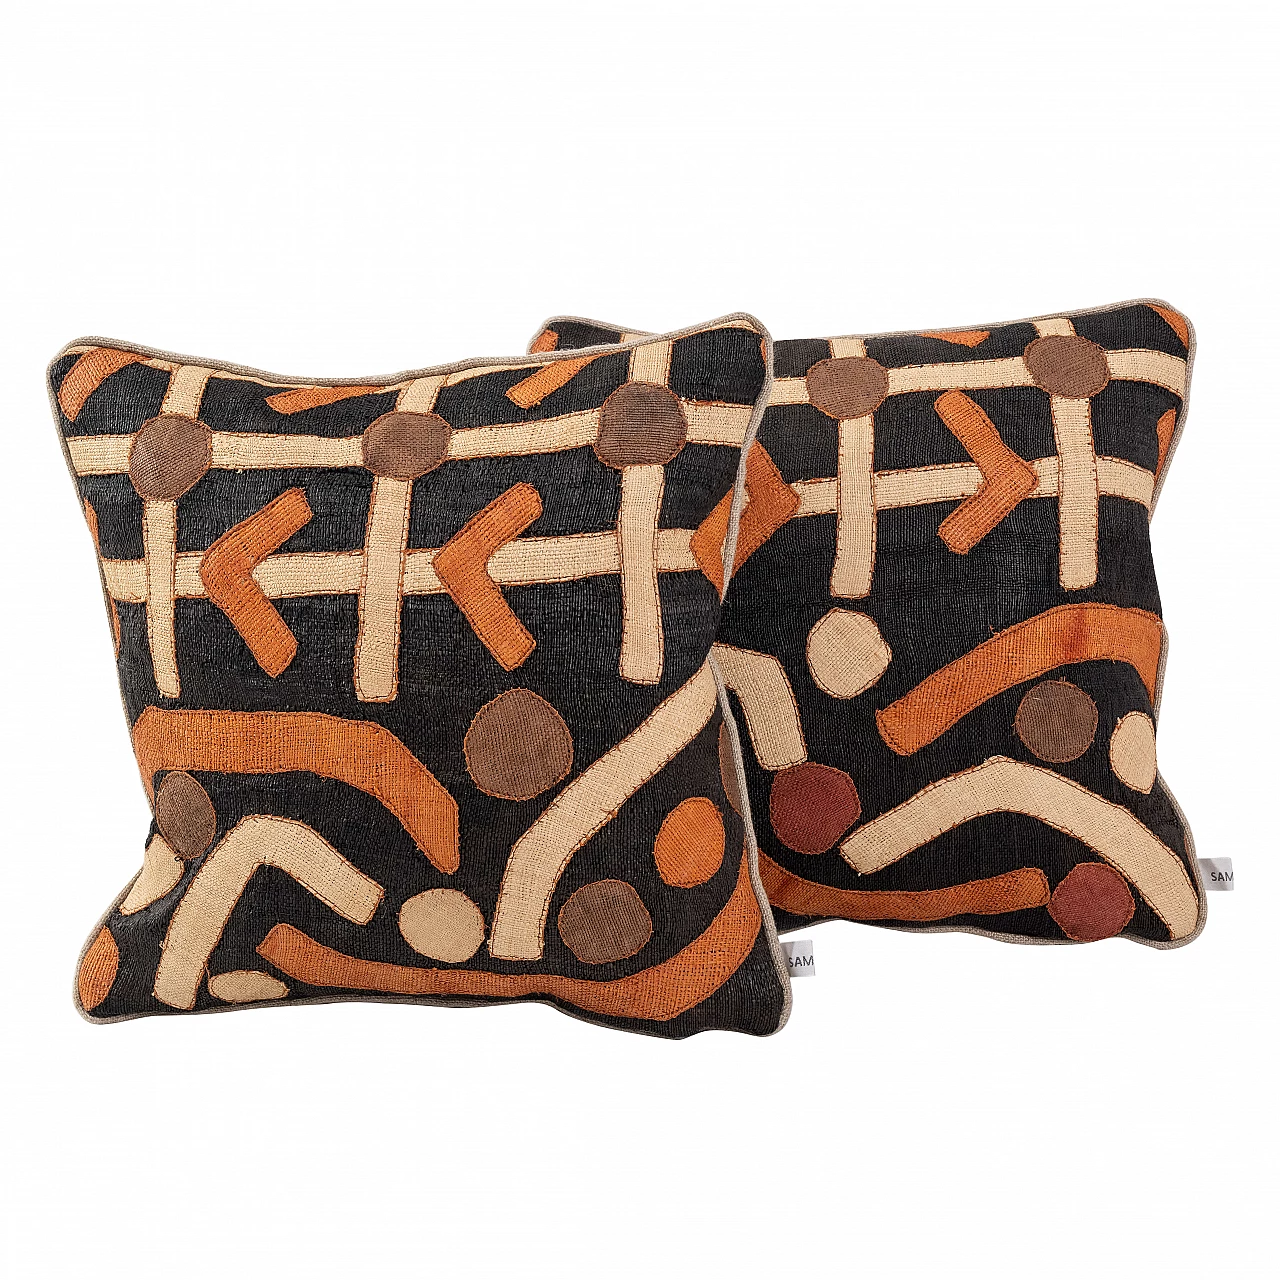 Pillow with arrows and polka dots kuba 1106594